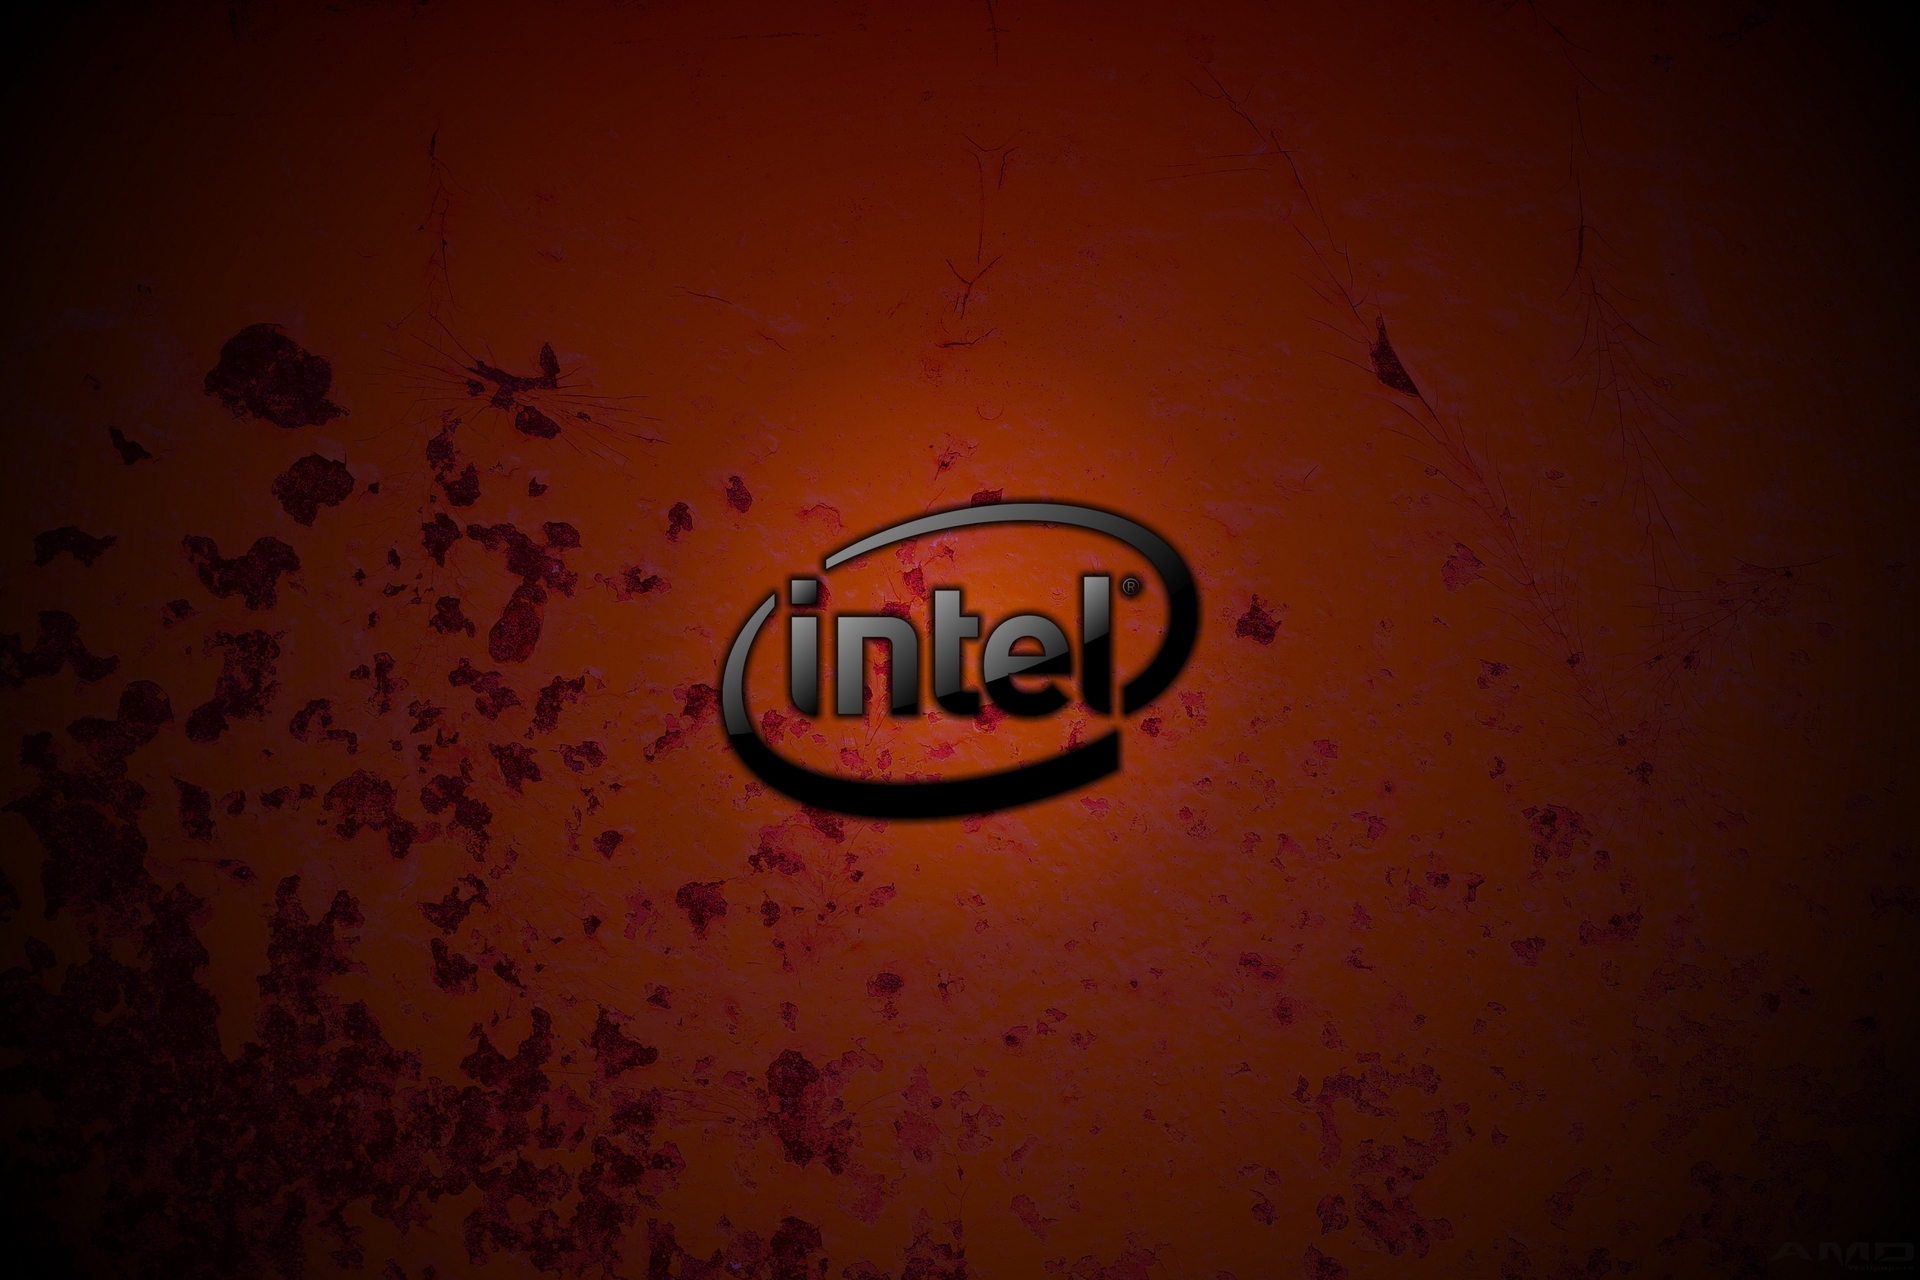 Intel Logo Dark Rust Red Metal Texture